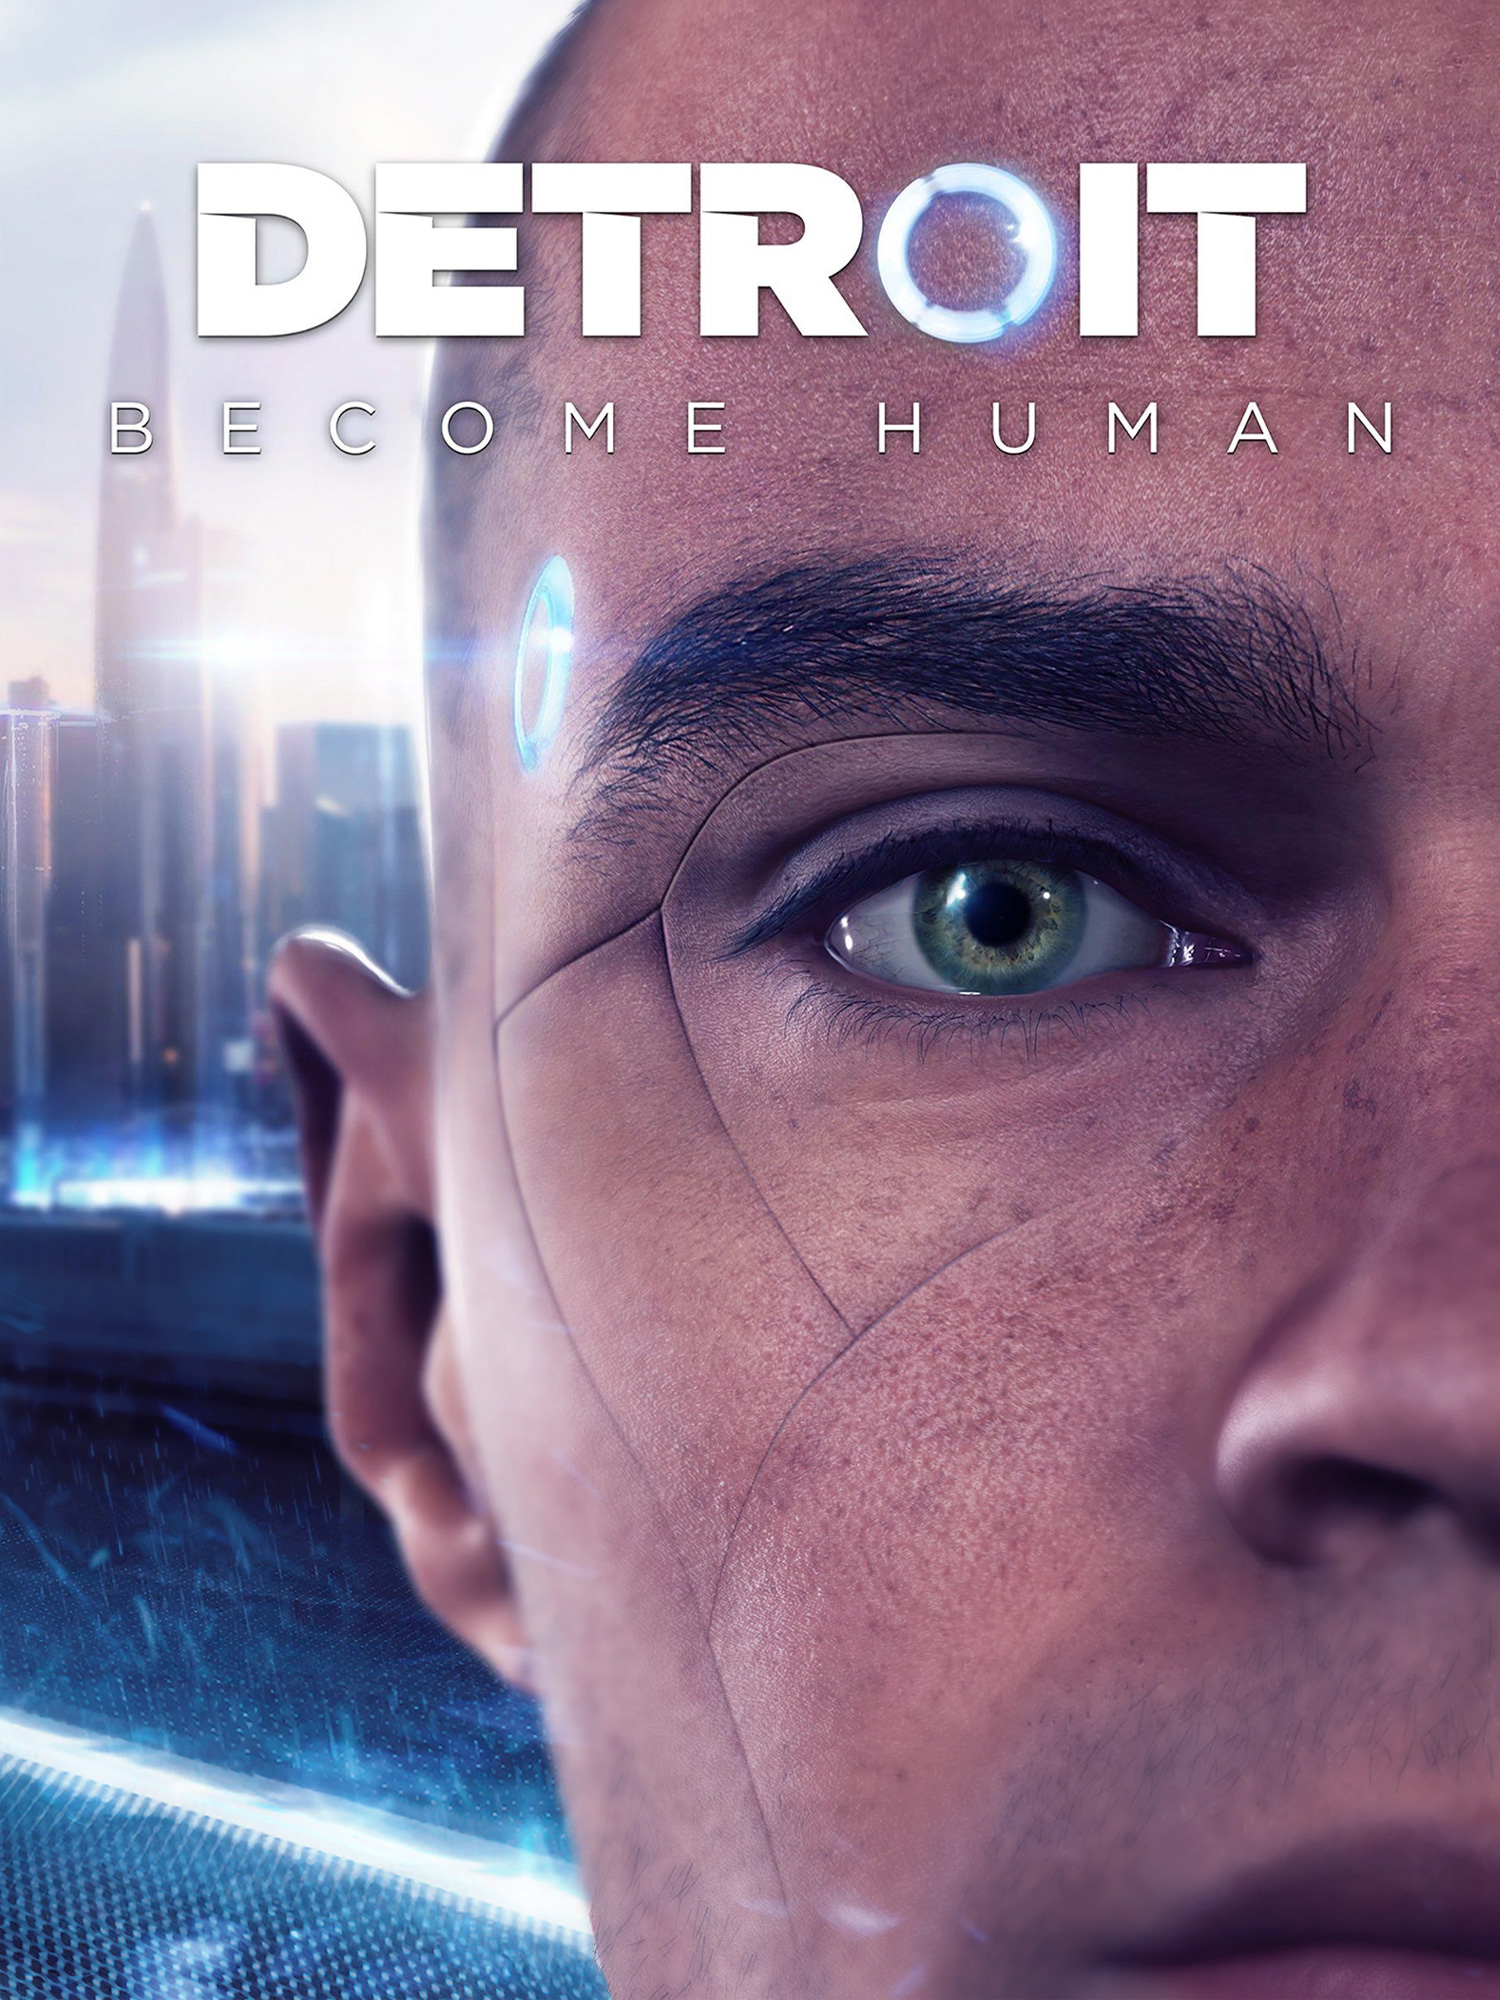 PGW17: Detroit: Become Human Gameplay Trailer